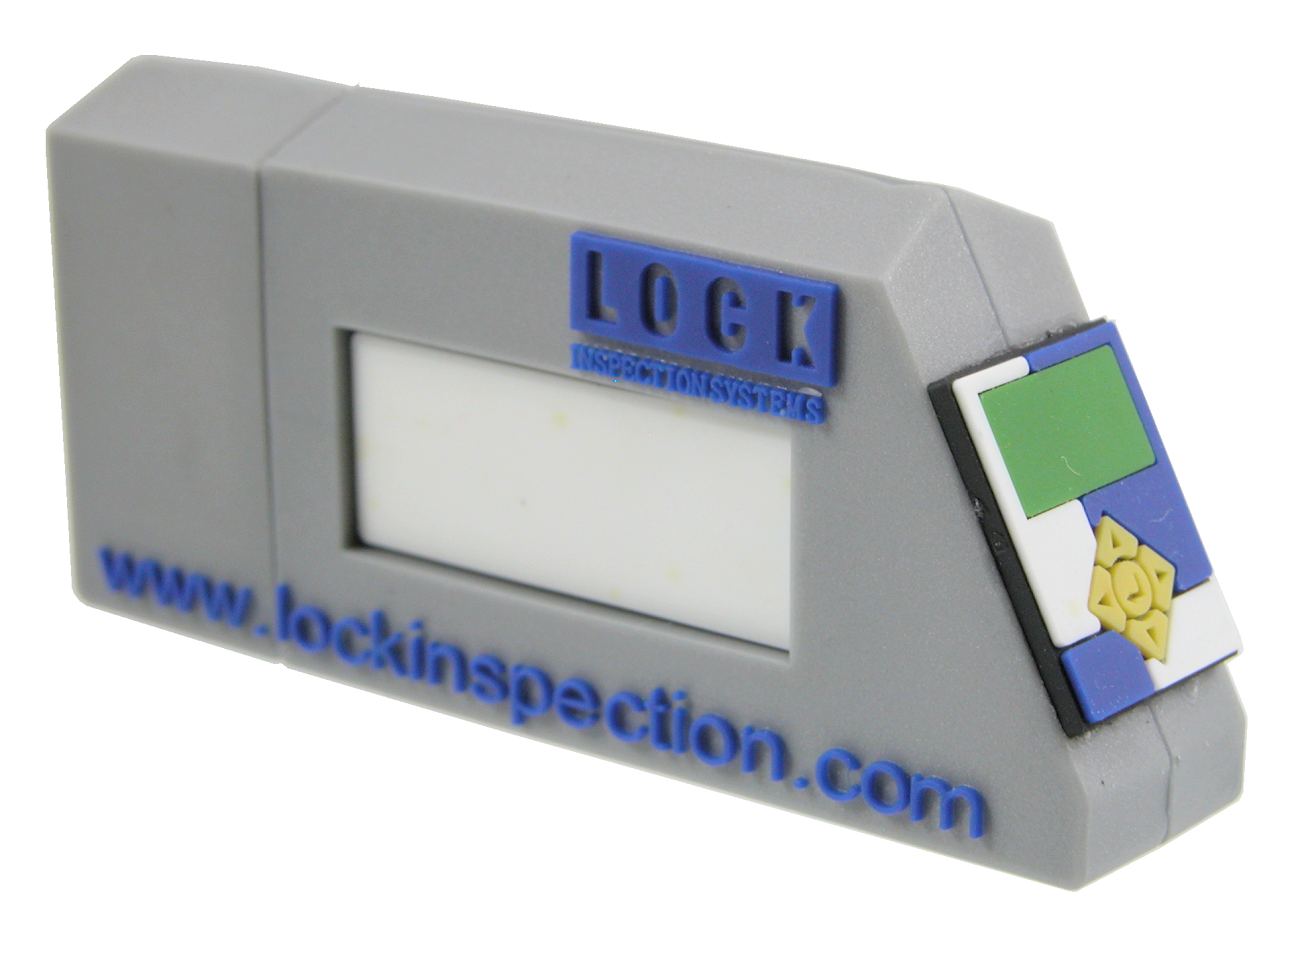 Bespoke Usb Memory Sticks Lock Inpspection Systems Cd221